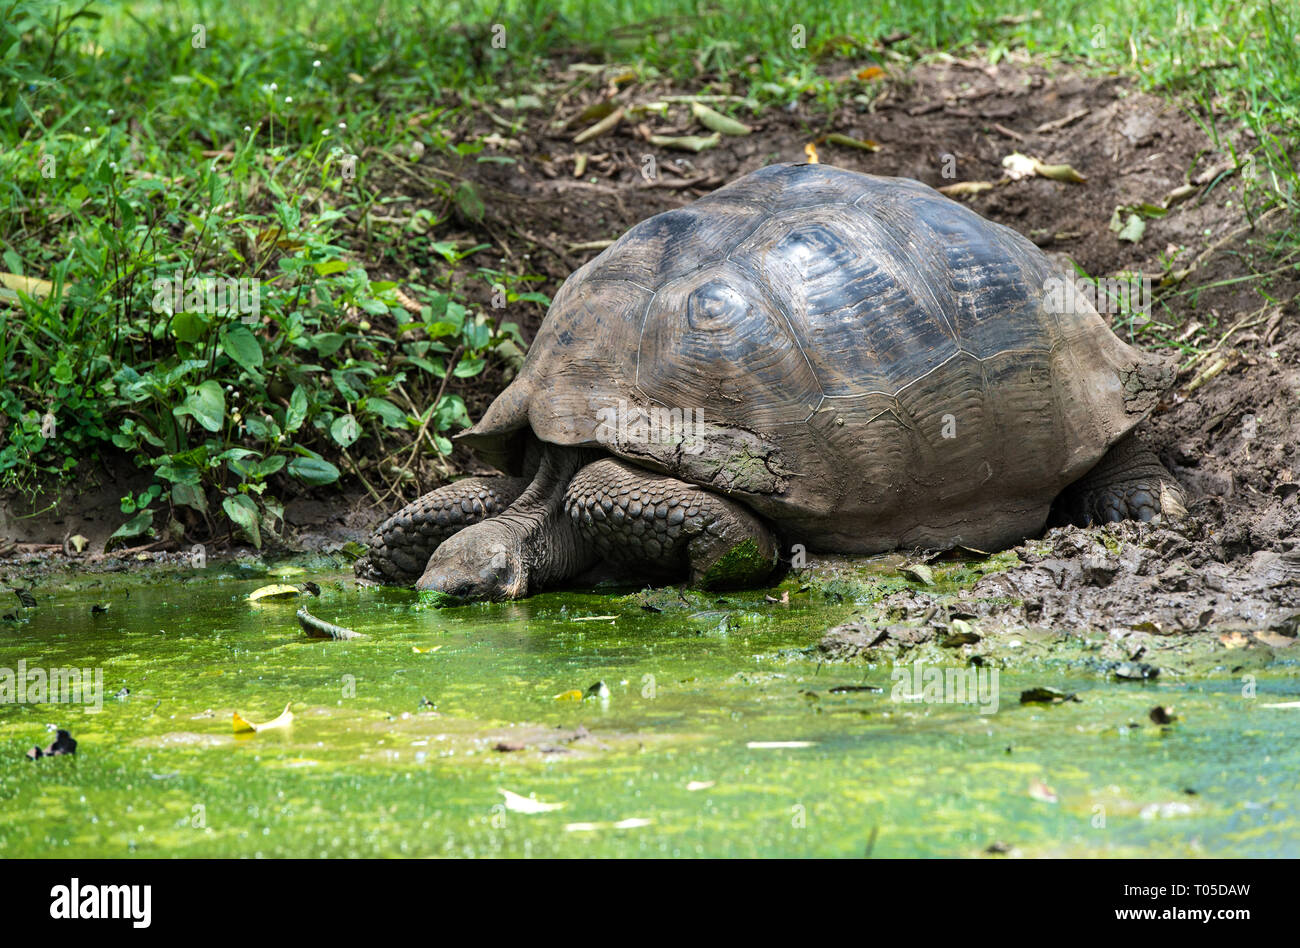 Galapagos giant tortoise (Chelonoidis nigra ssp) drinking water in a pond, Santa Cruz Island, Galapagos Islands, Ecuador Stock Photo